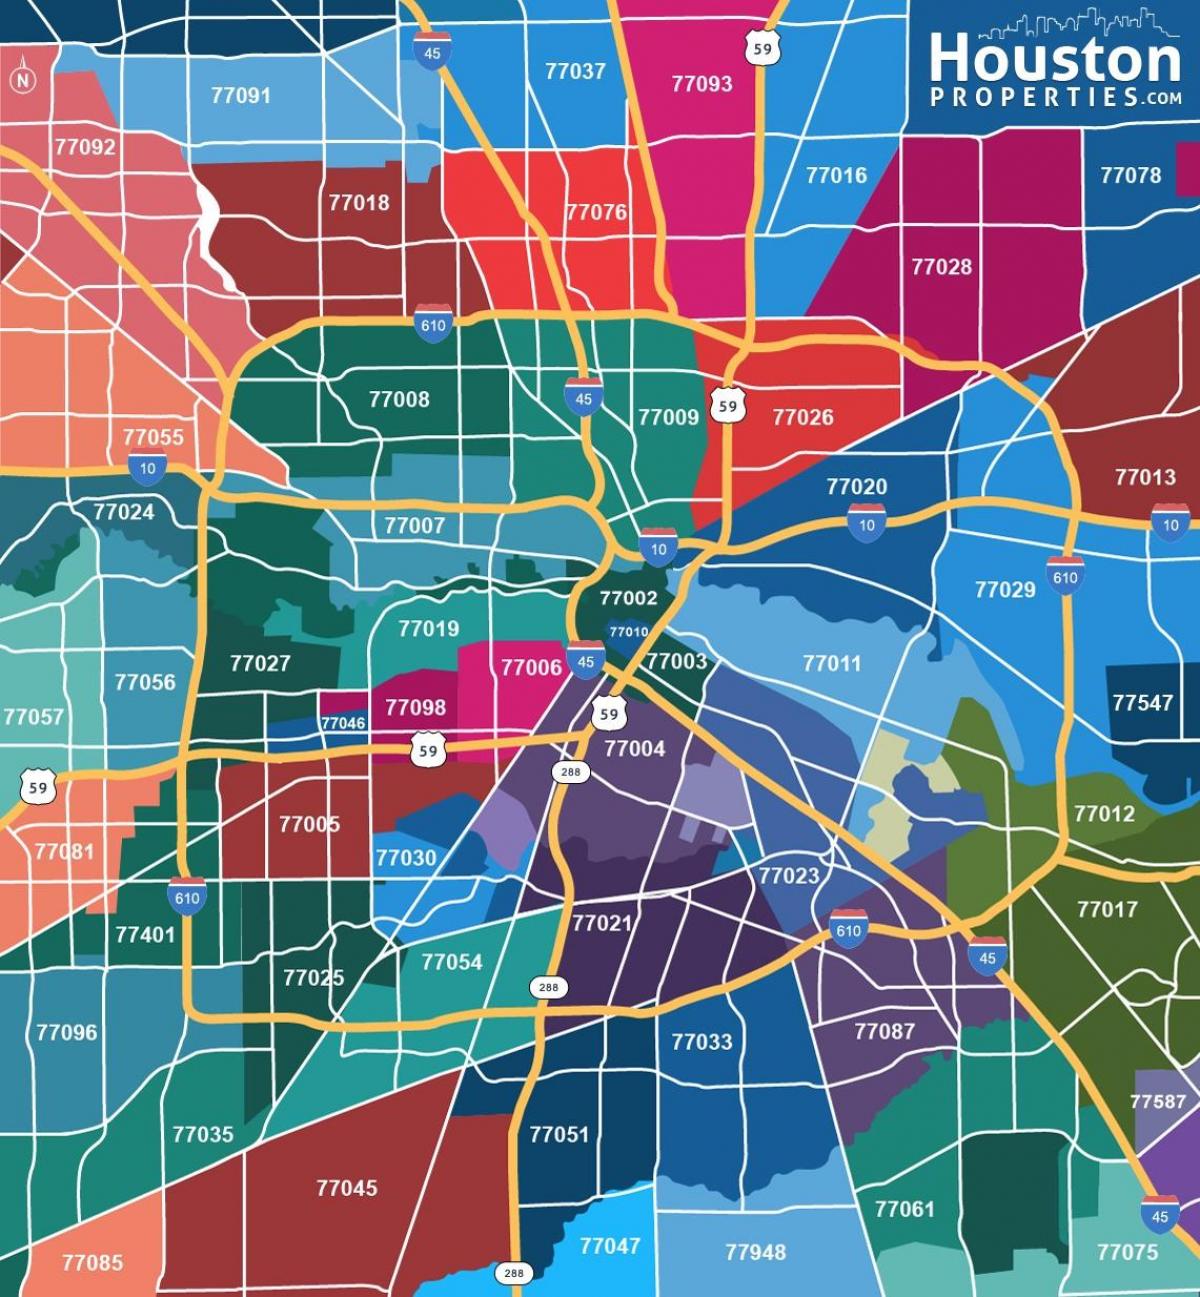 نقشه حومه شهر هوستون